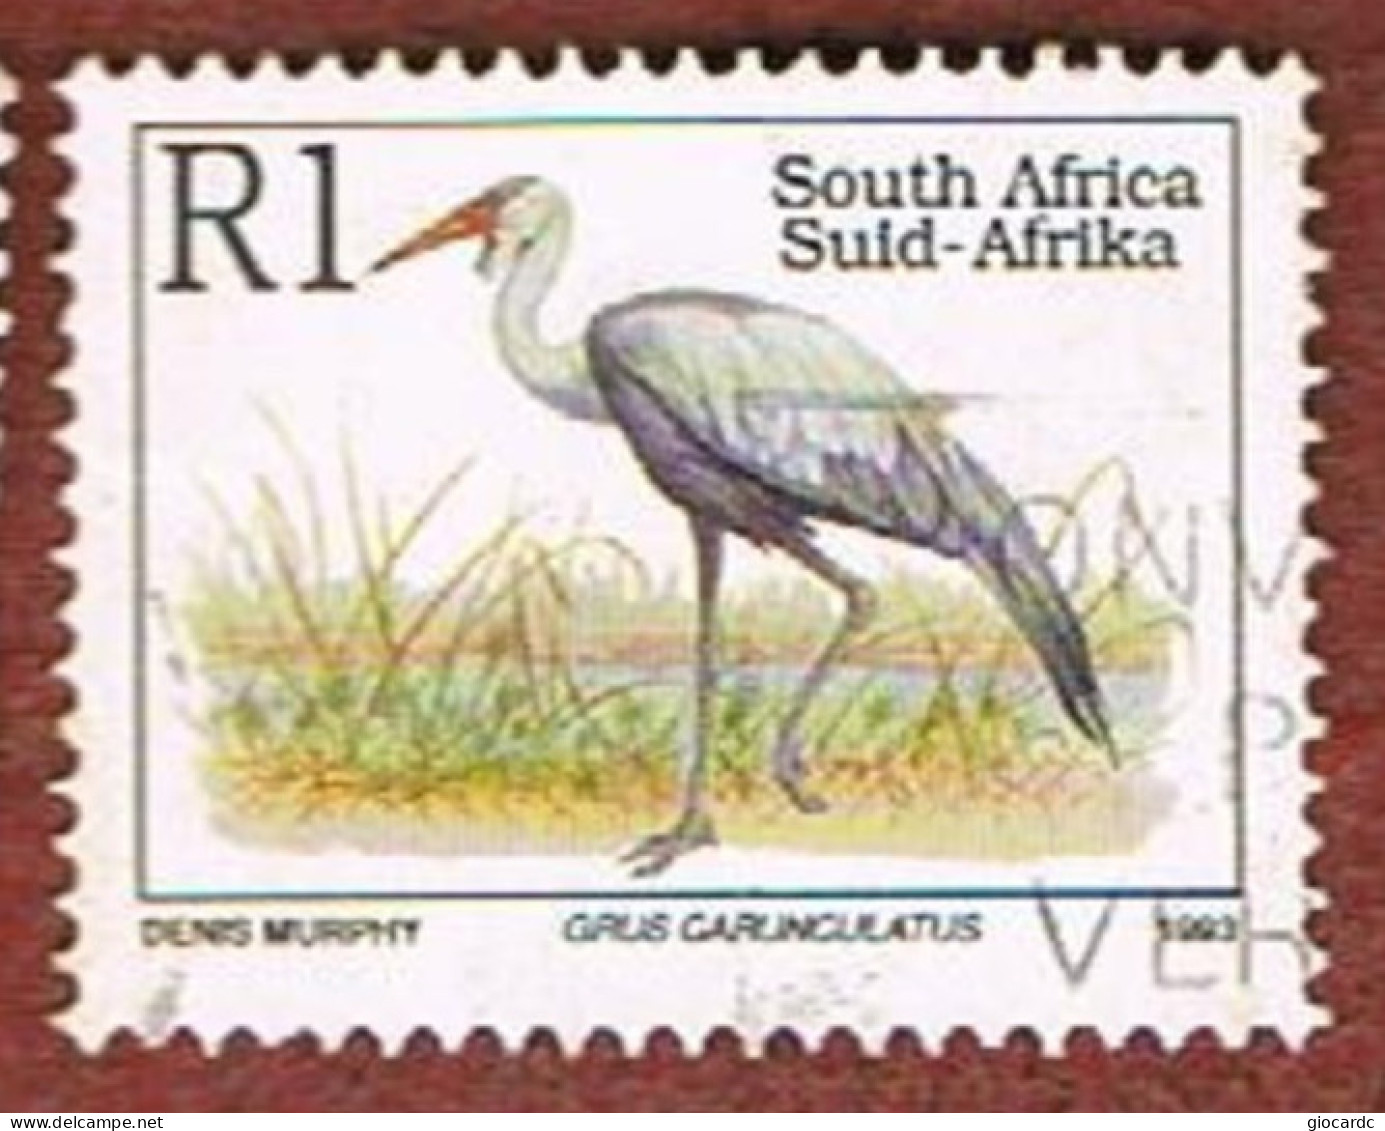 SUD AFRICA (SOUTH AFRICA) - SG 817c - 1993 ENDANGERED ANIMALS: WATTLED CRANE   - USED - Usados